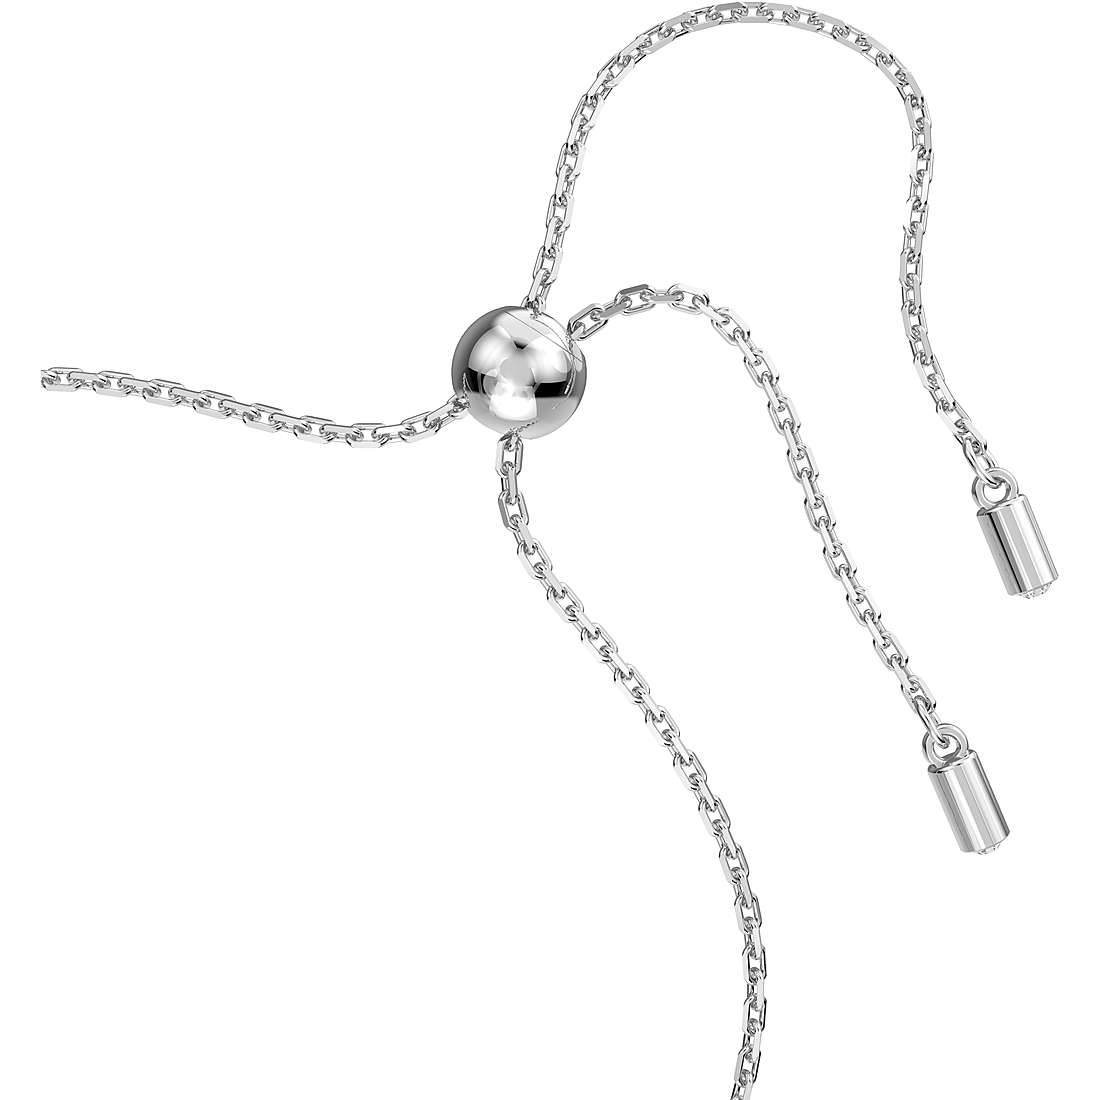 bracelet woman jewellery Swarovski Constella 5636266